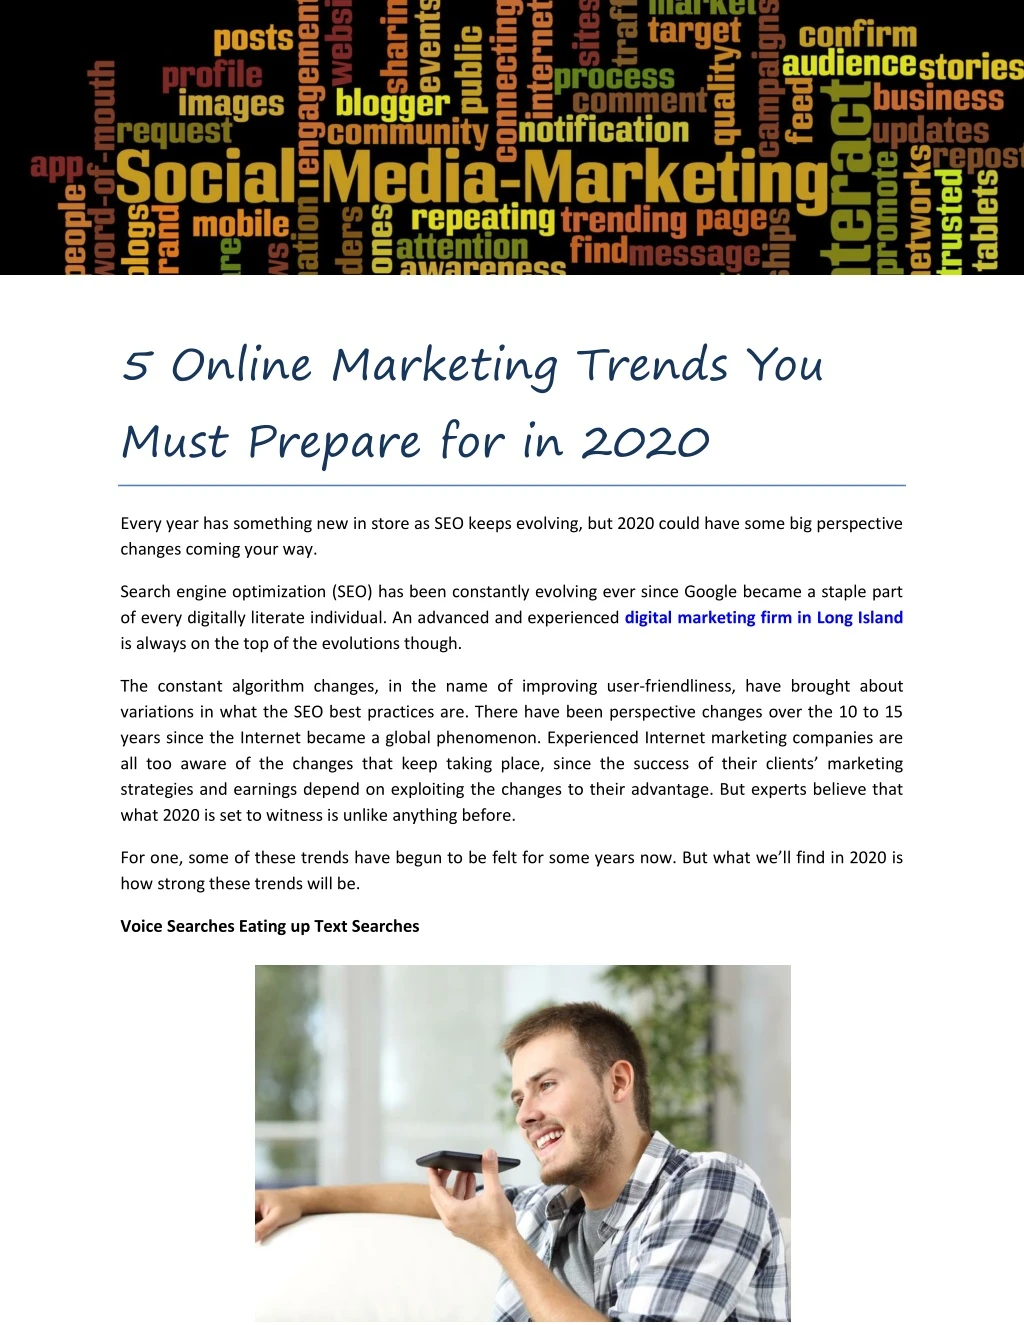 5 online marketing trends you must prepare